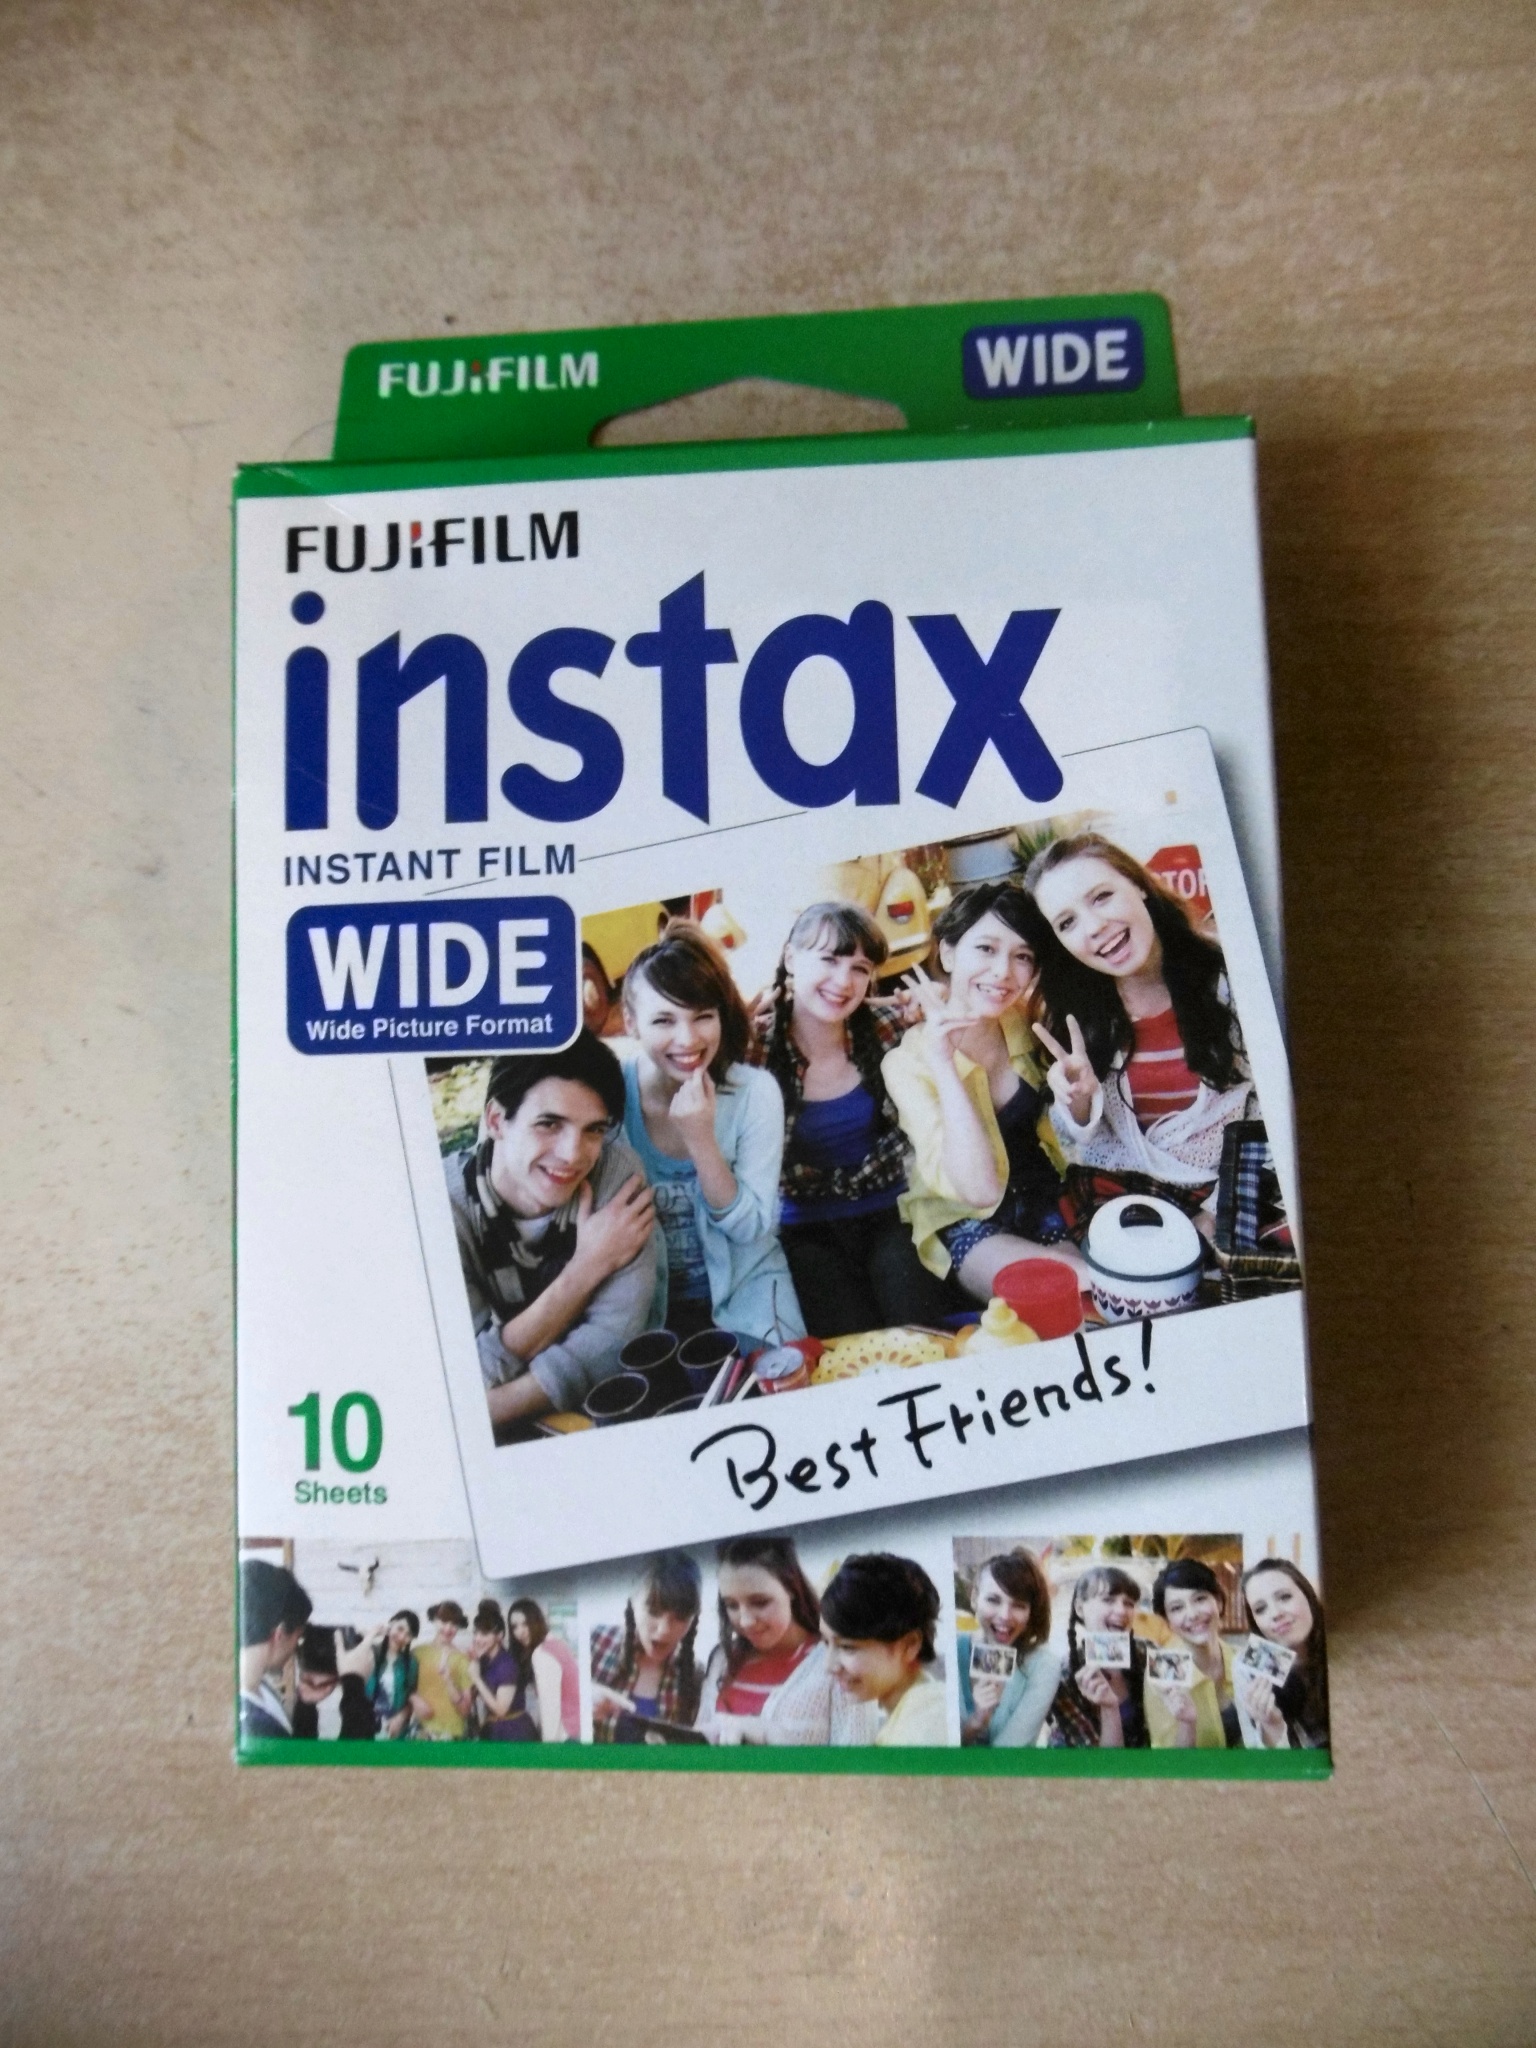 Картридж для фото fujifilm colorfilm instax mini